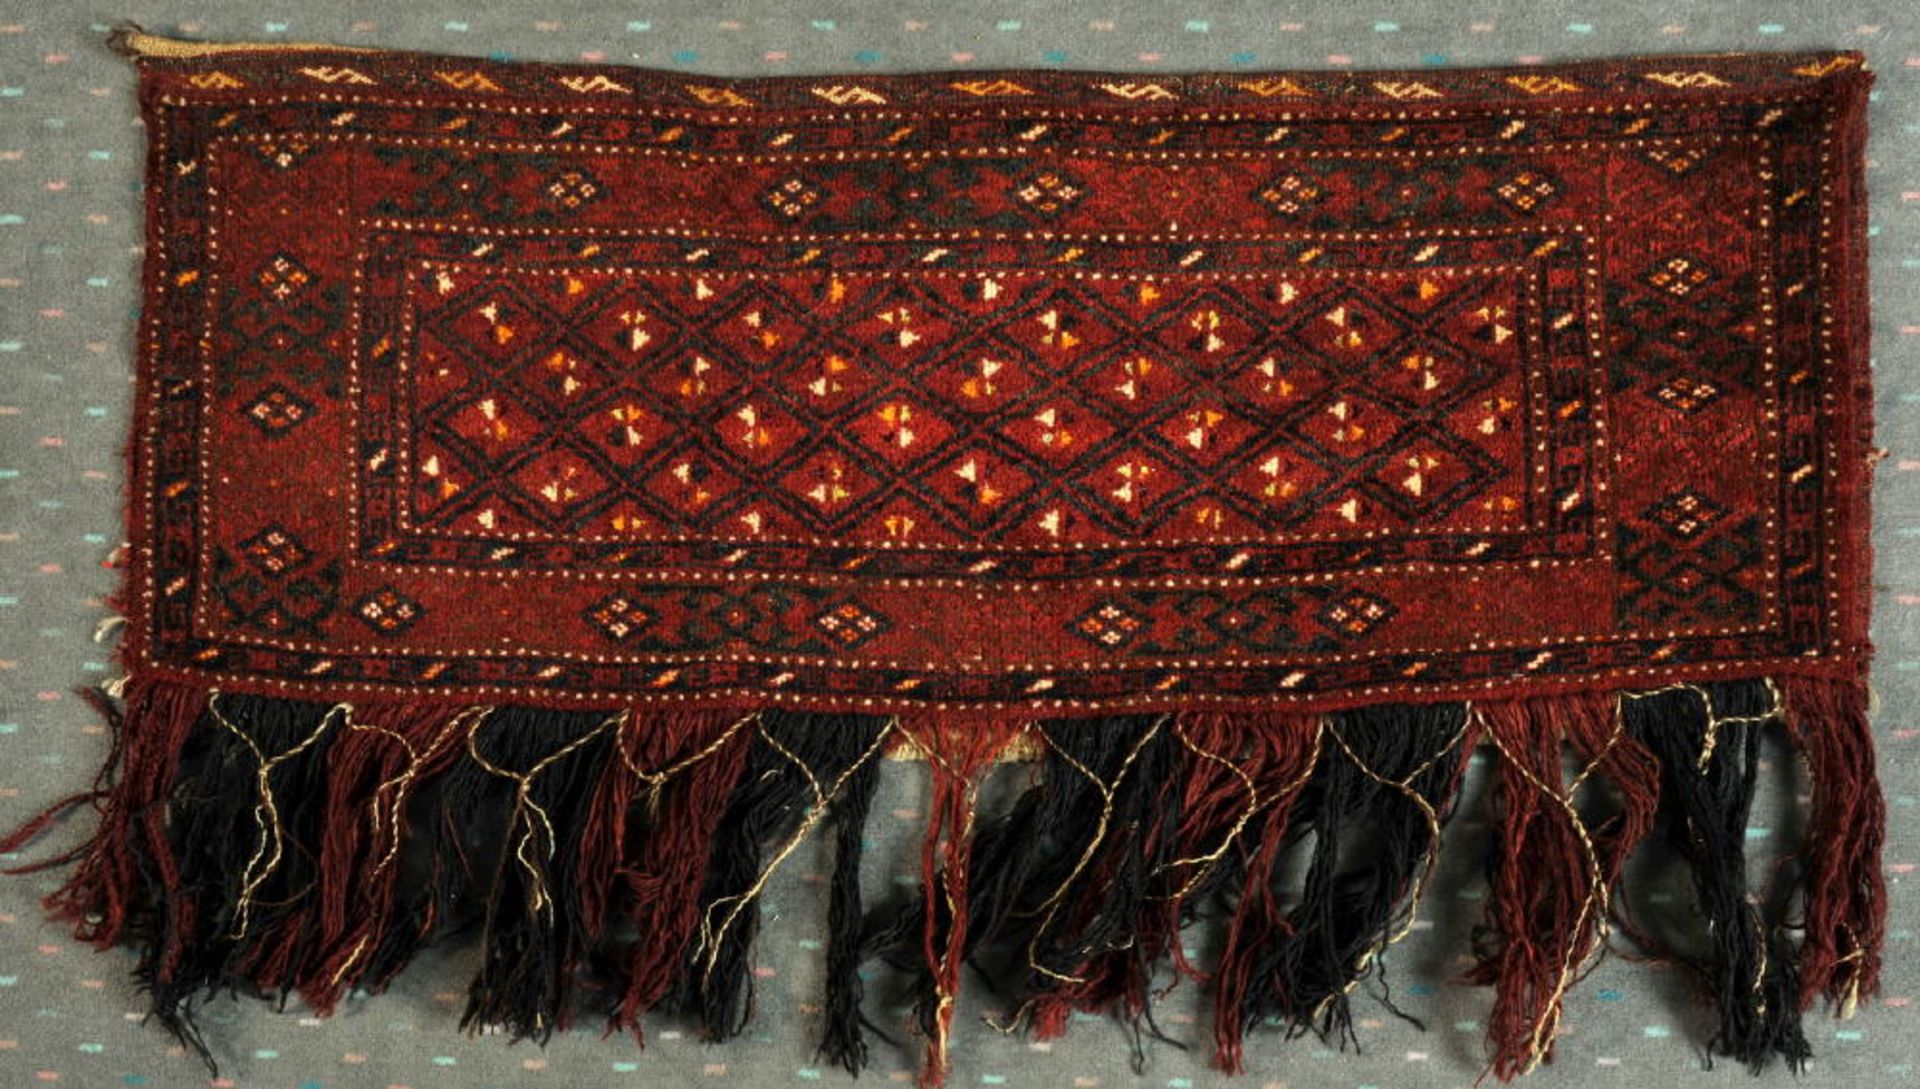 Jolar-Zeltbehang, Afghanistan, 40 x 102 cmalt, Wolle, rotgrundig, durchgemustert mit